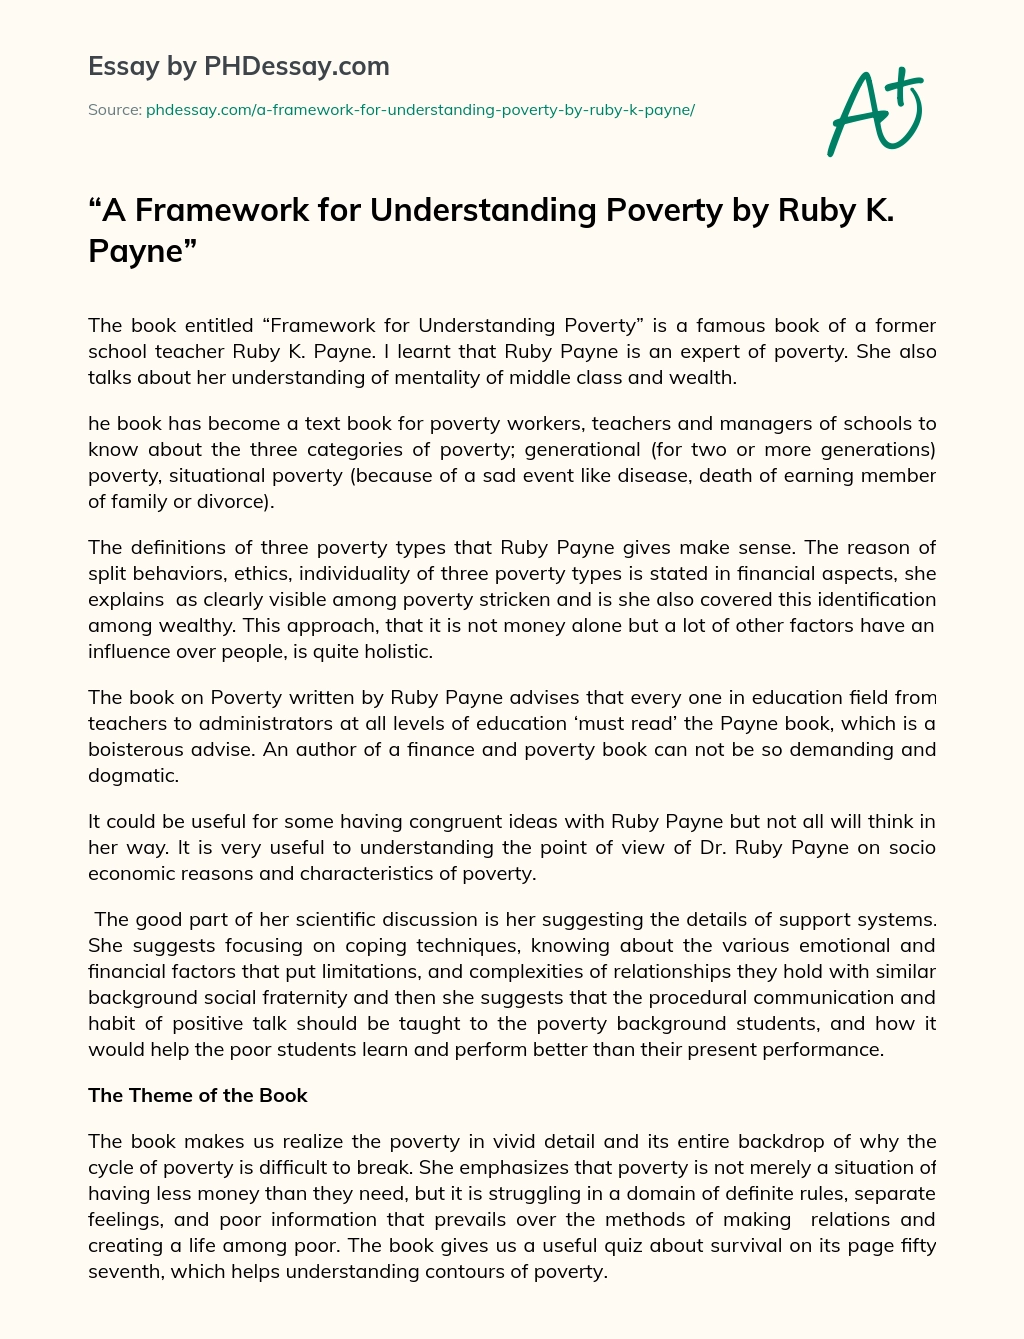 A Framework for Understanding Poverty by Ruby K. Payne essay